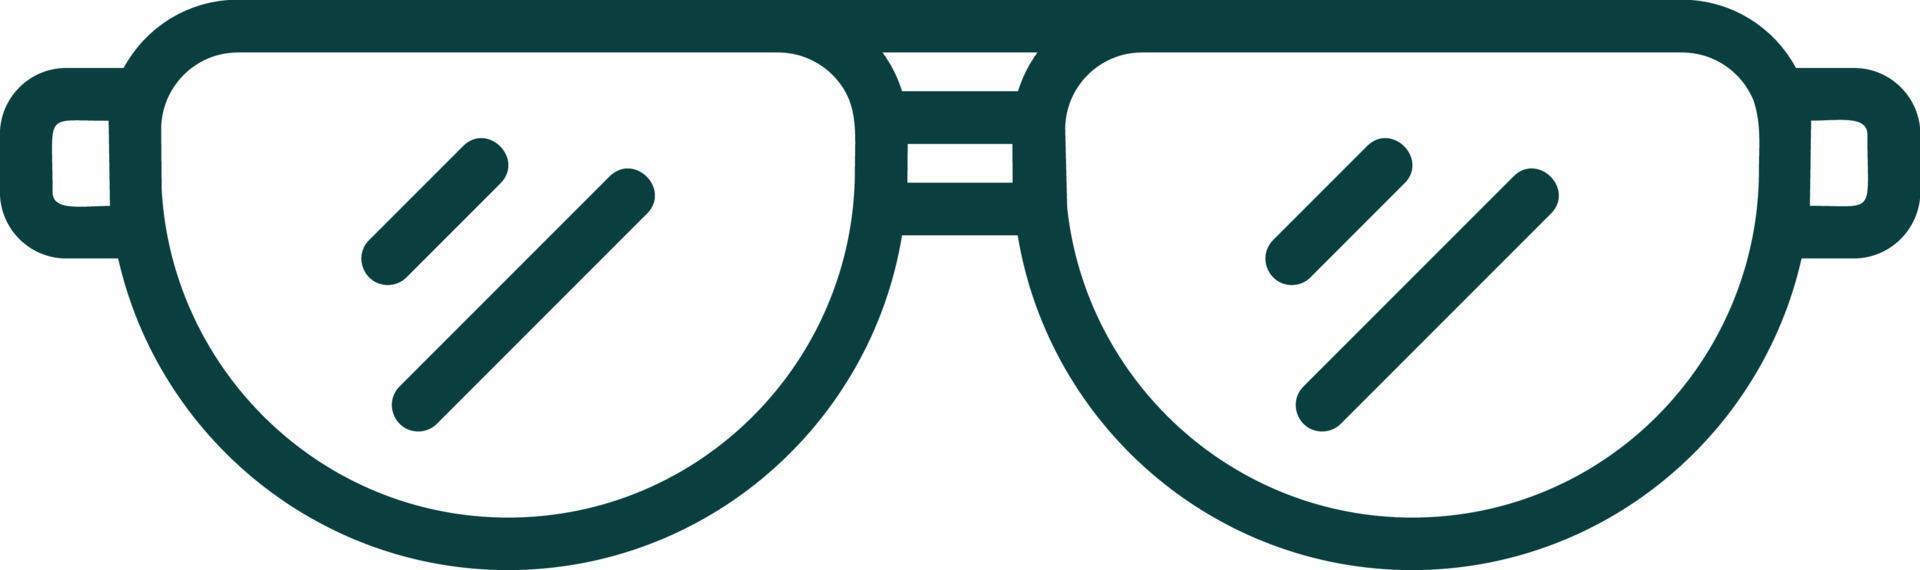 Sol glasögon vektor ikon design